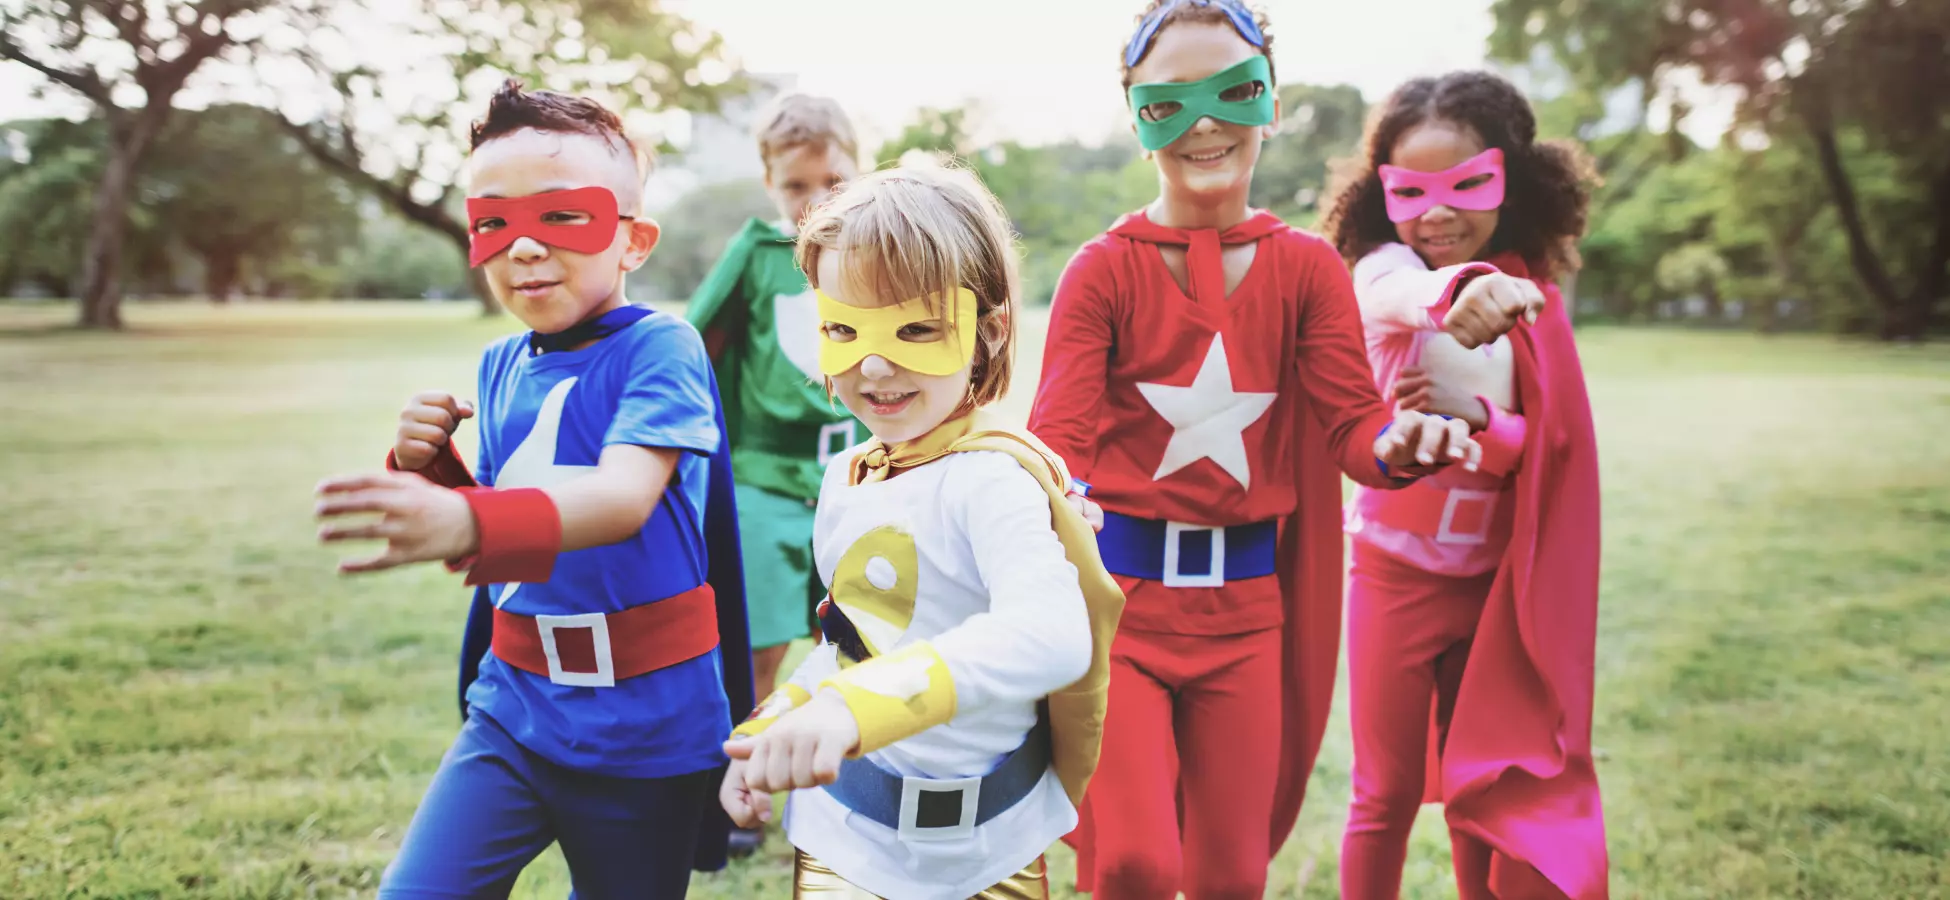 Als Superhelden verkleidete Kinder